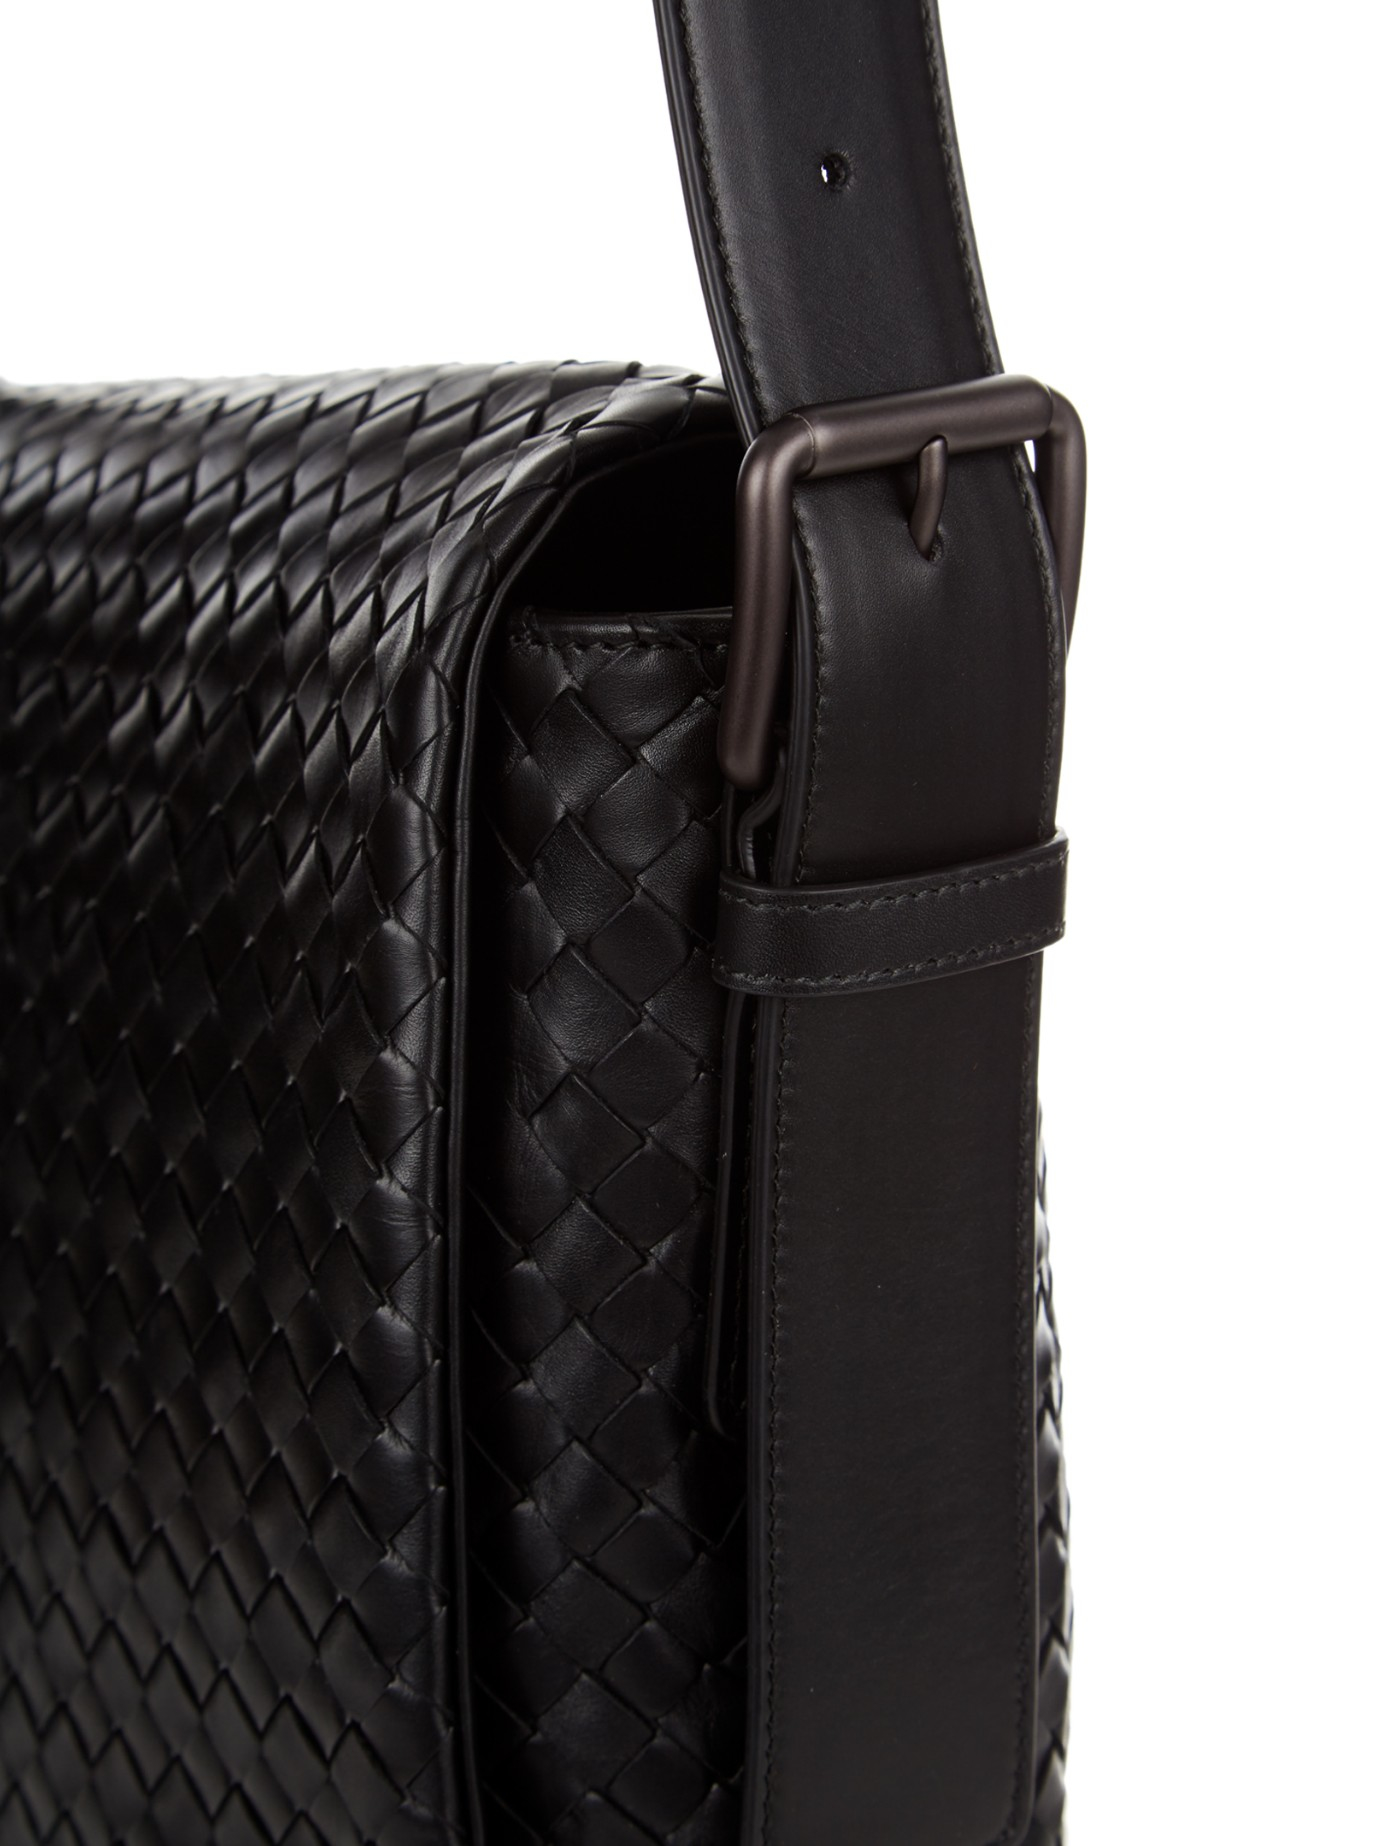 Lyst - Bottega Veneta Intrecciato Leather Messenger Bag in Black for Men